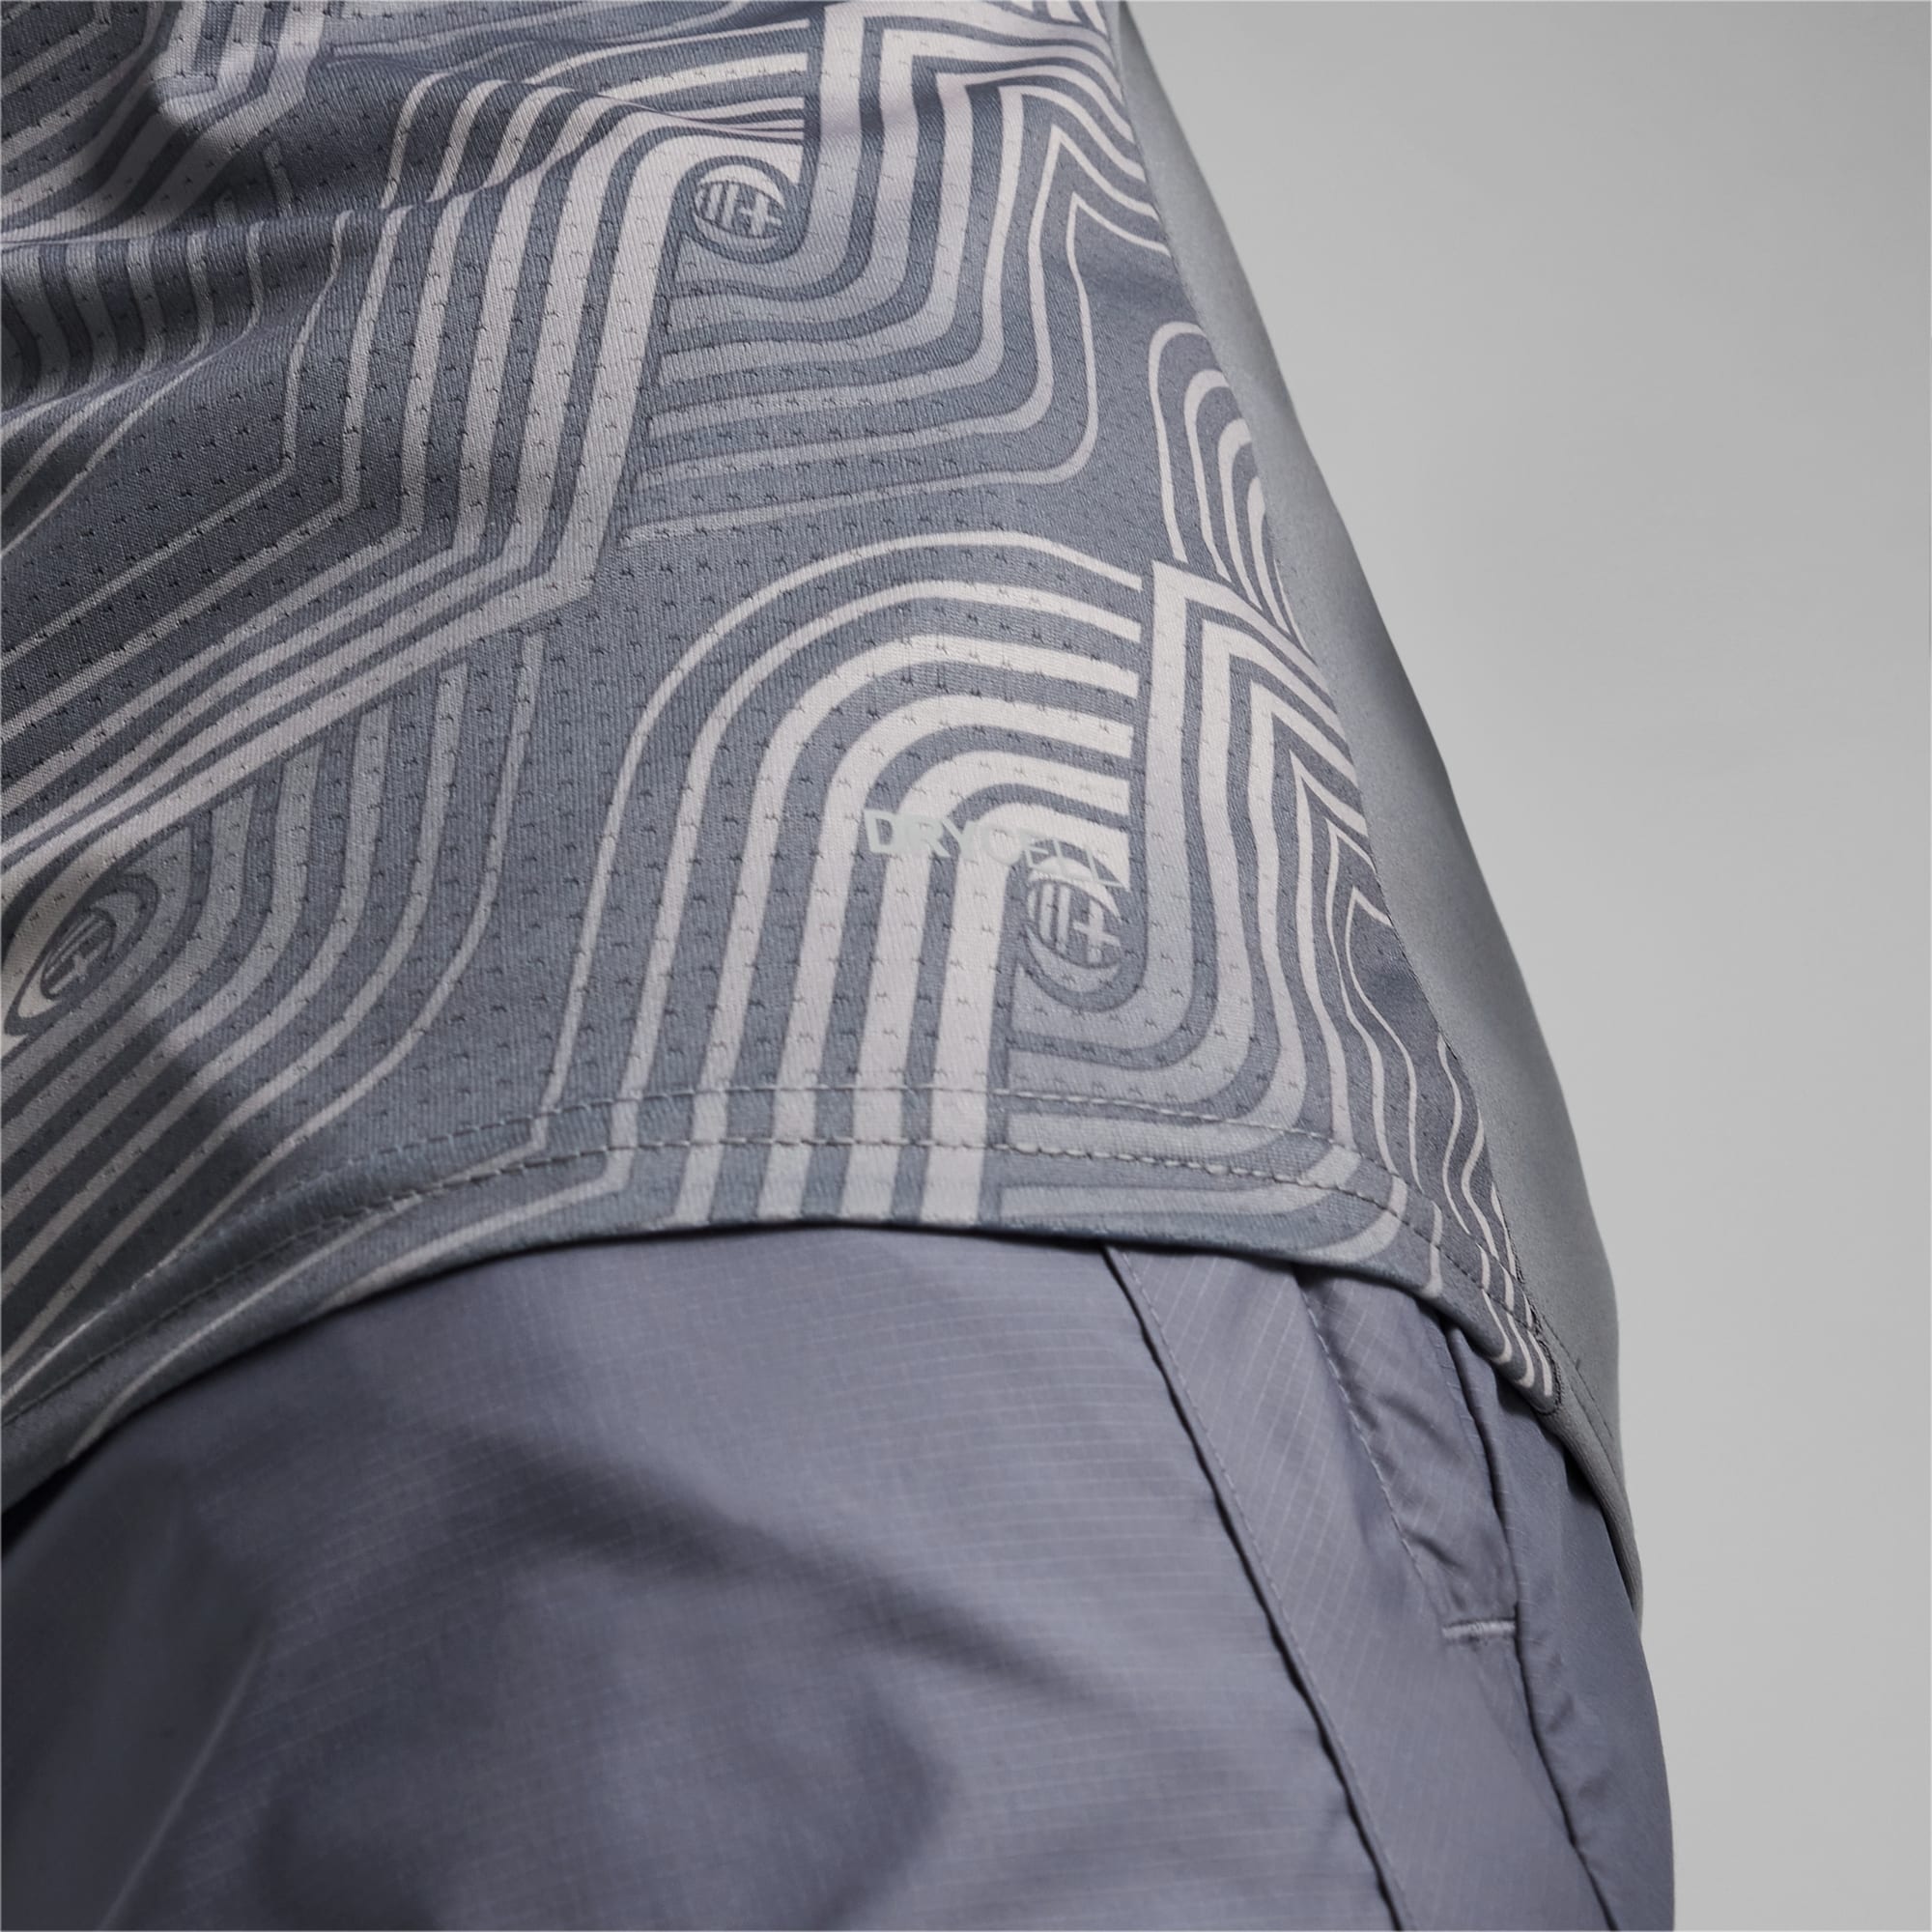 Men's PUMA AC Milan Pre-Match Football Jersey, Grey Tile/Ravish, Size L, Clothing